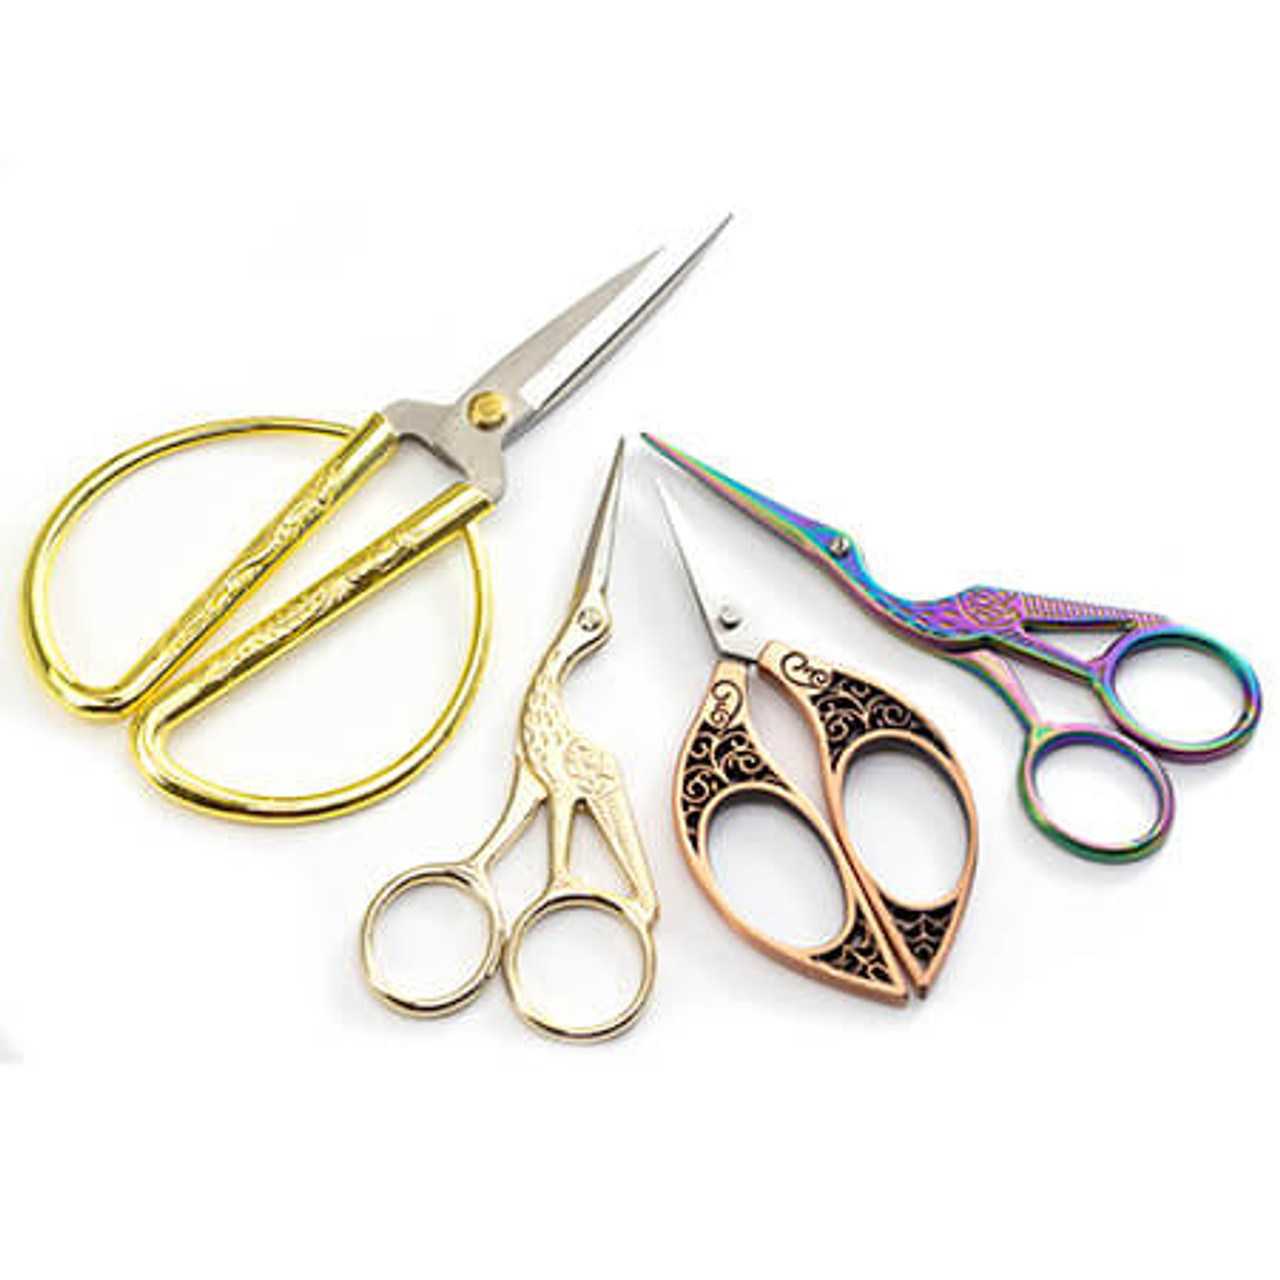 Octpeak Scissors Vintage European Style Bronze Stainless Steel Exquisite  Mini Embroidery Scissors,Crochet Scissors,Fancy Scissors